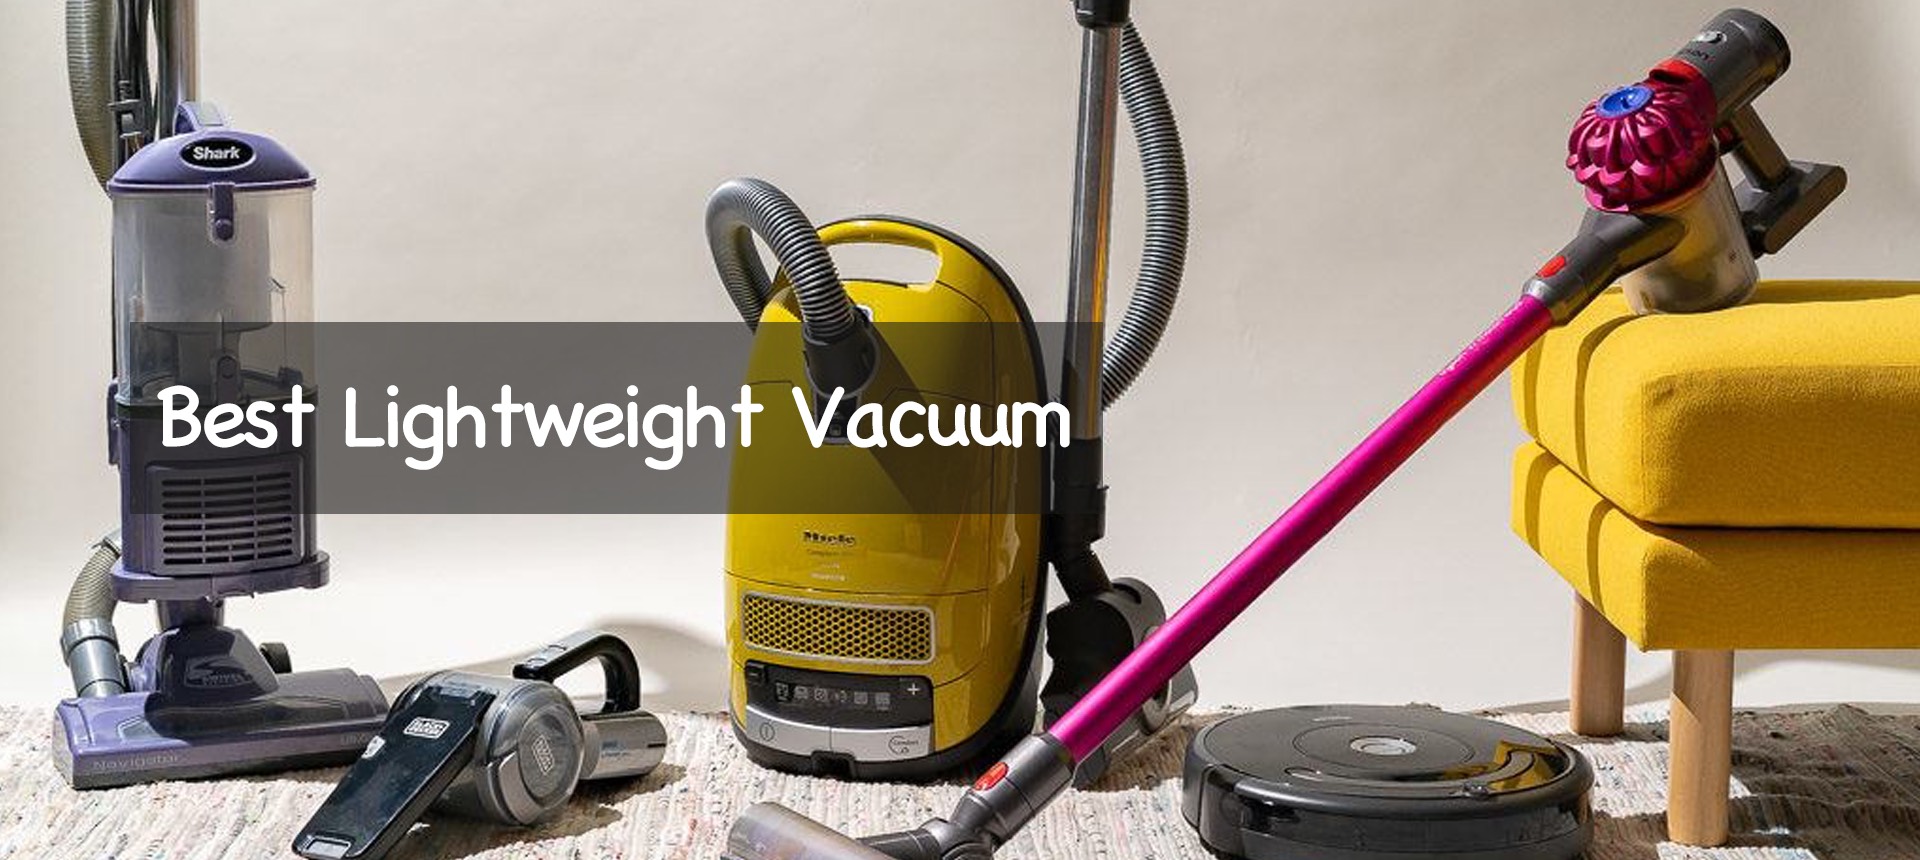 Best Lightweight Vacuum